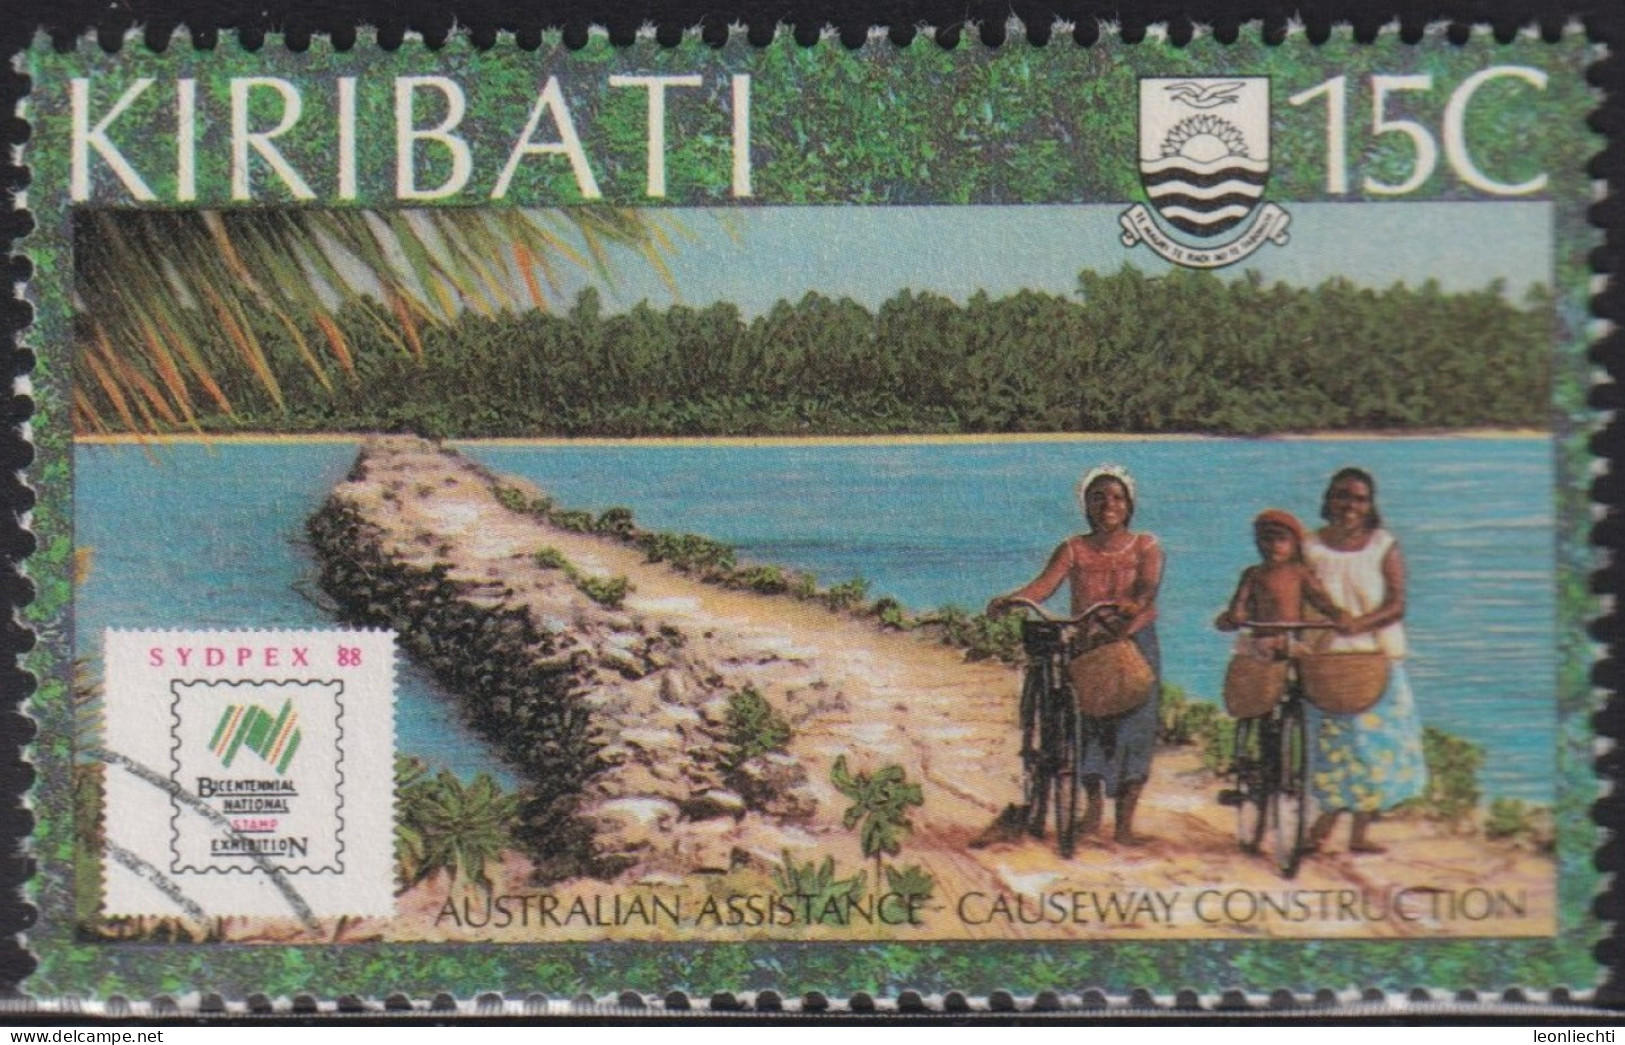 1988 Kiribati ° Mi:KI 506,Yt:KI 185, Sg:KI 288, Australia Causeway Construction, Sydpex 1988 Frauen Mit Fahrrad - Kiribati (1979-...)